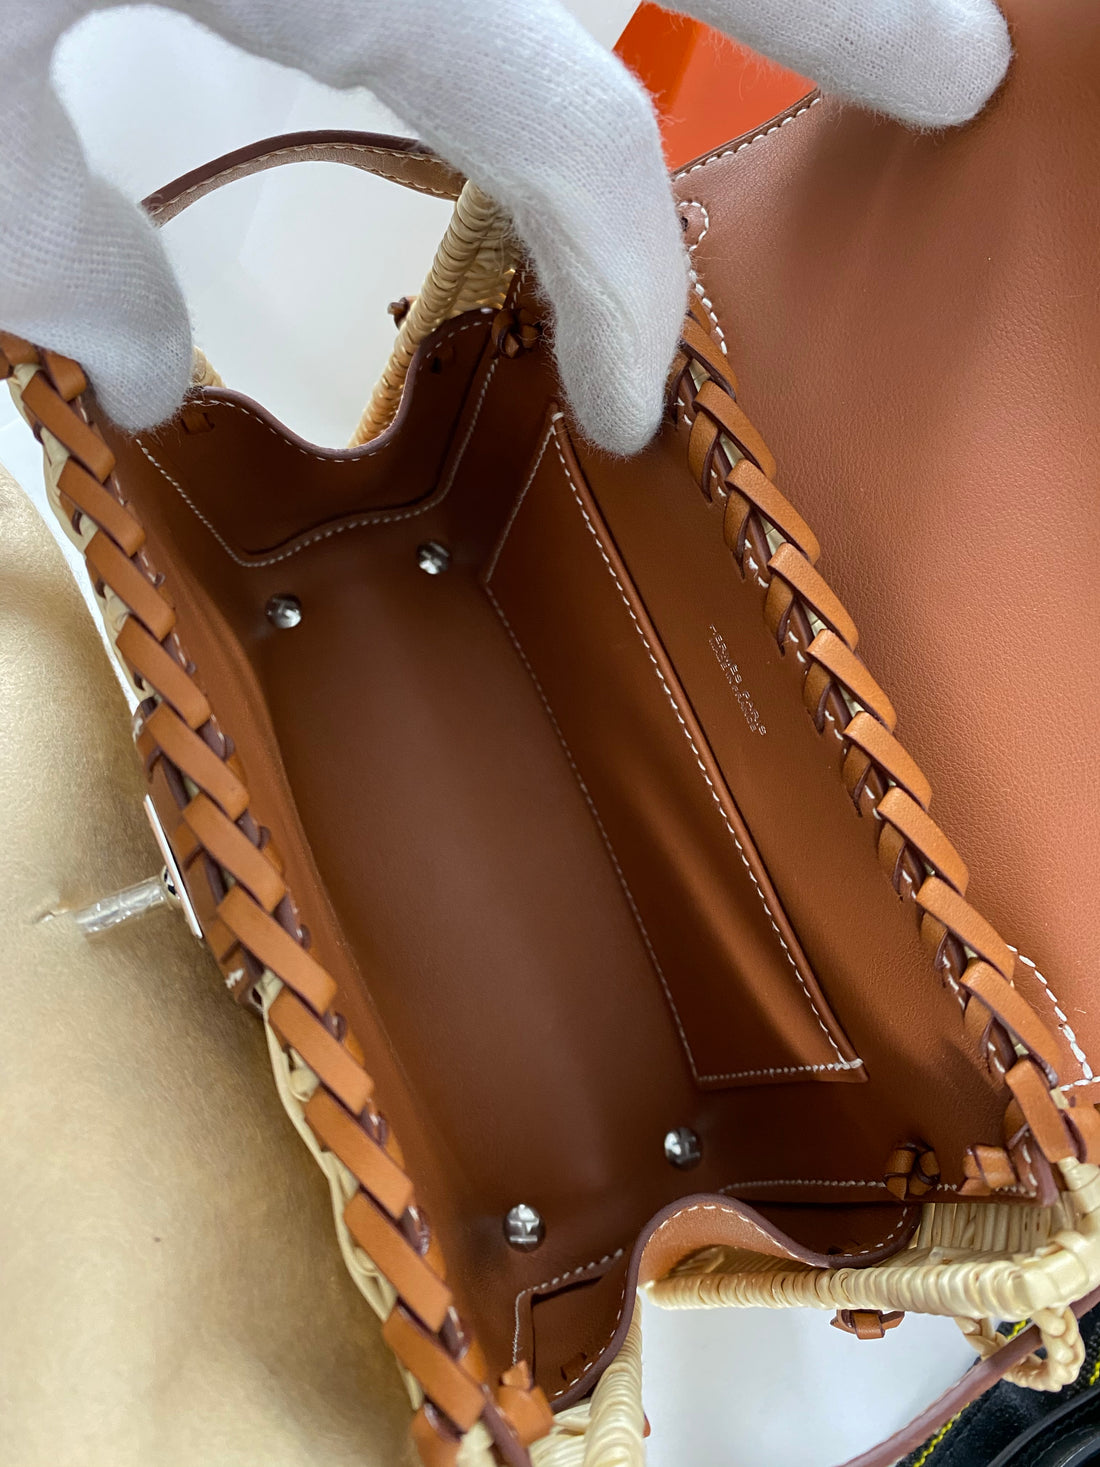 Hermes Blanc White Picnic Mini Kelly Bag Handbag Wicker – MAISON